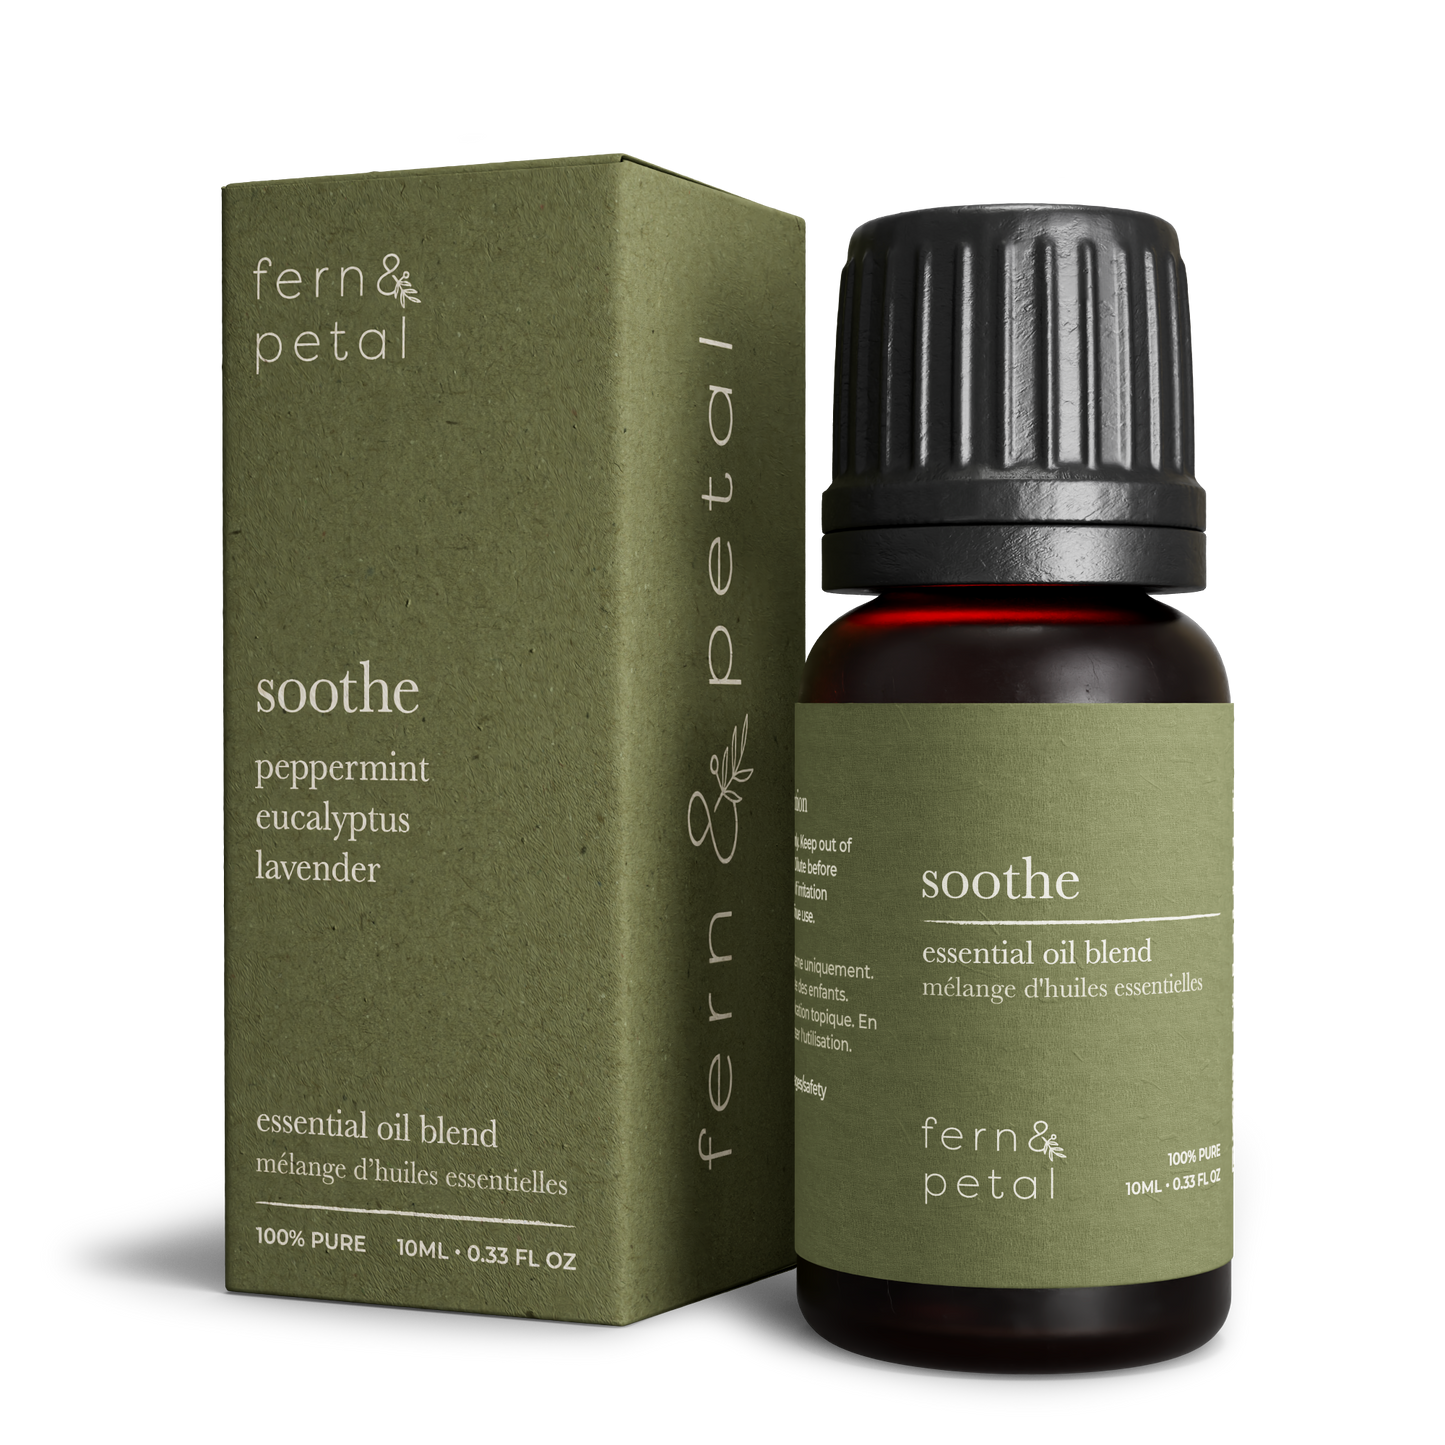 Fern & Petal - Soothe Essential Oil Blend